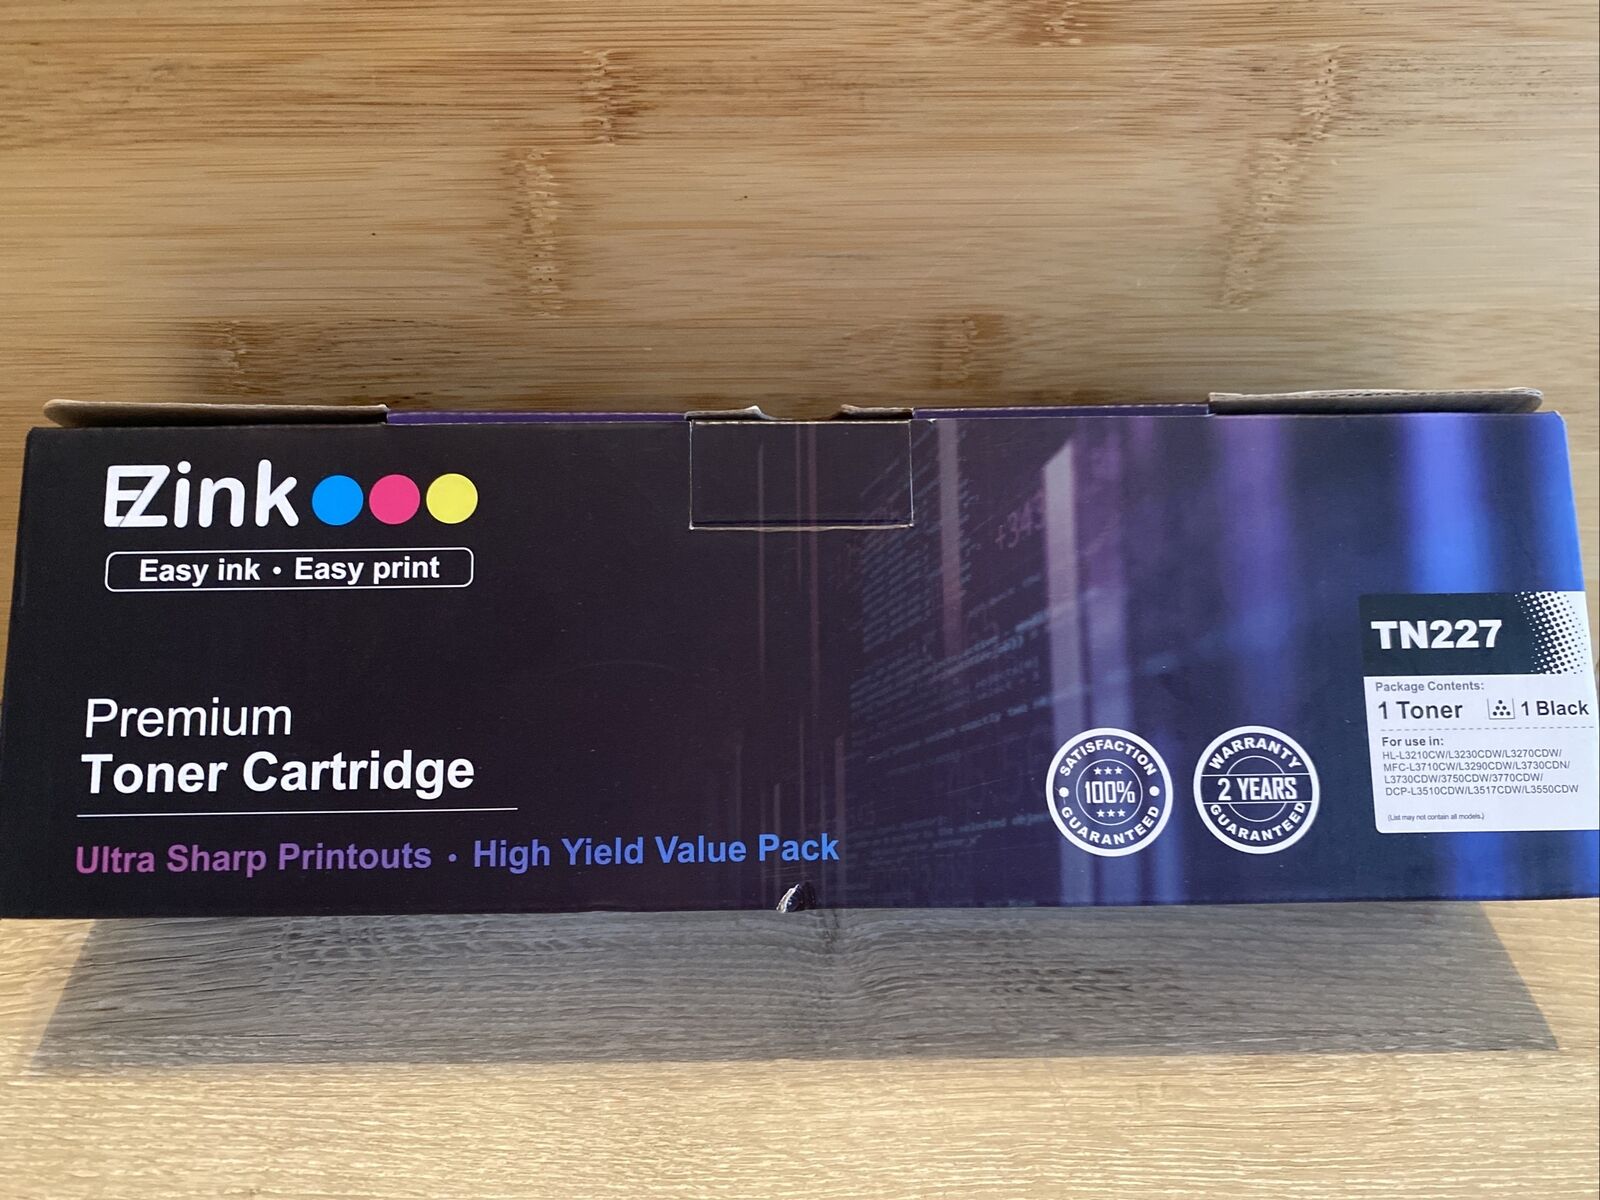 EZINK TN227 Compatible Premium Toner Cartridge for Brother HL-L3210CW - Black